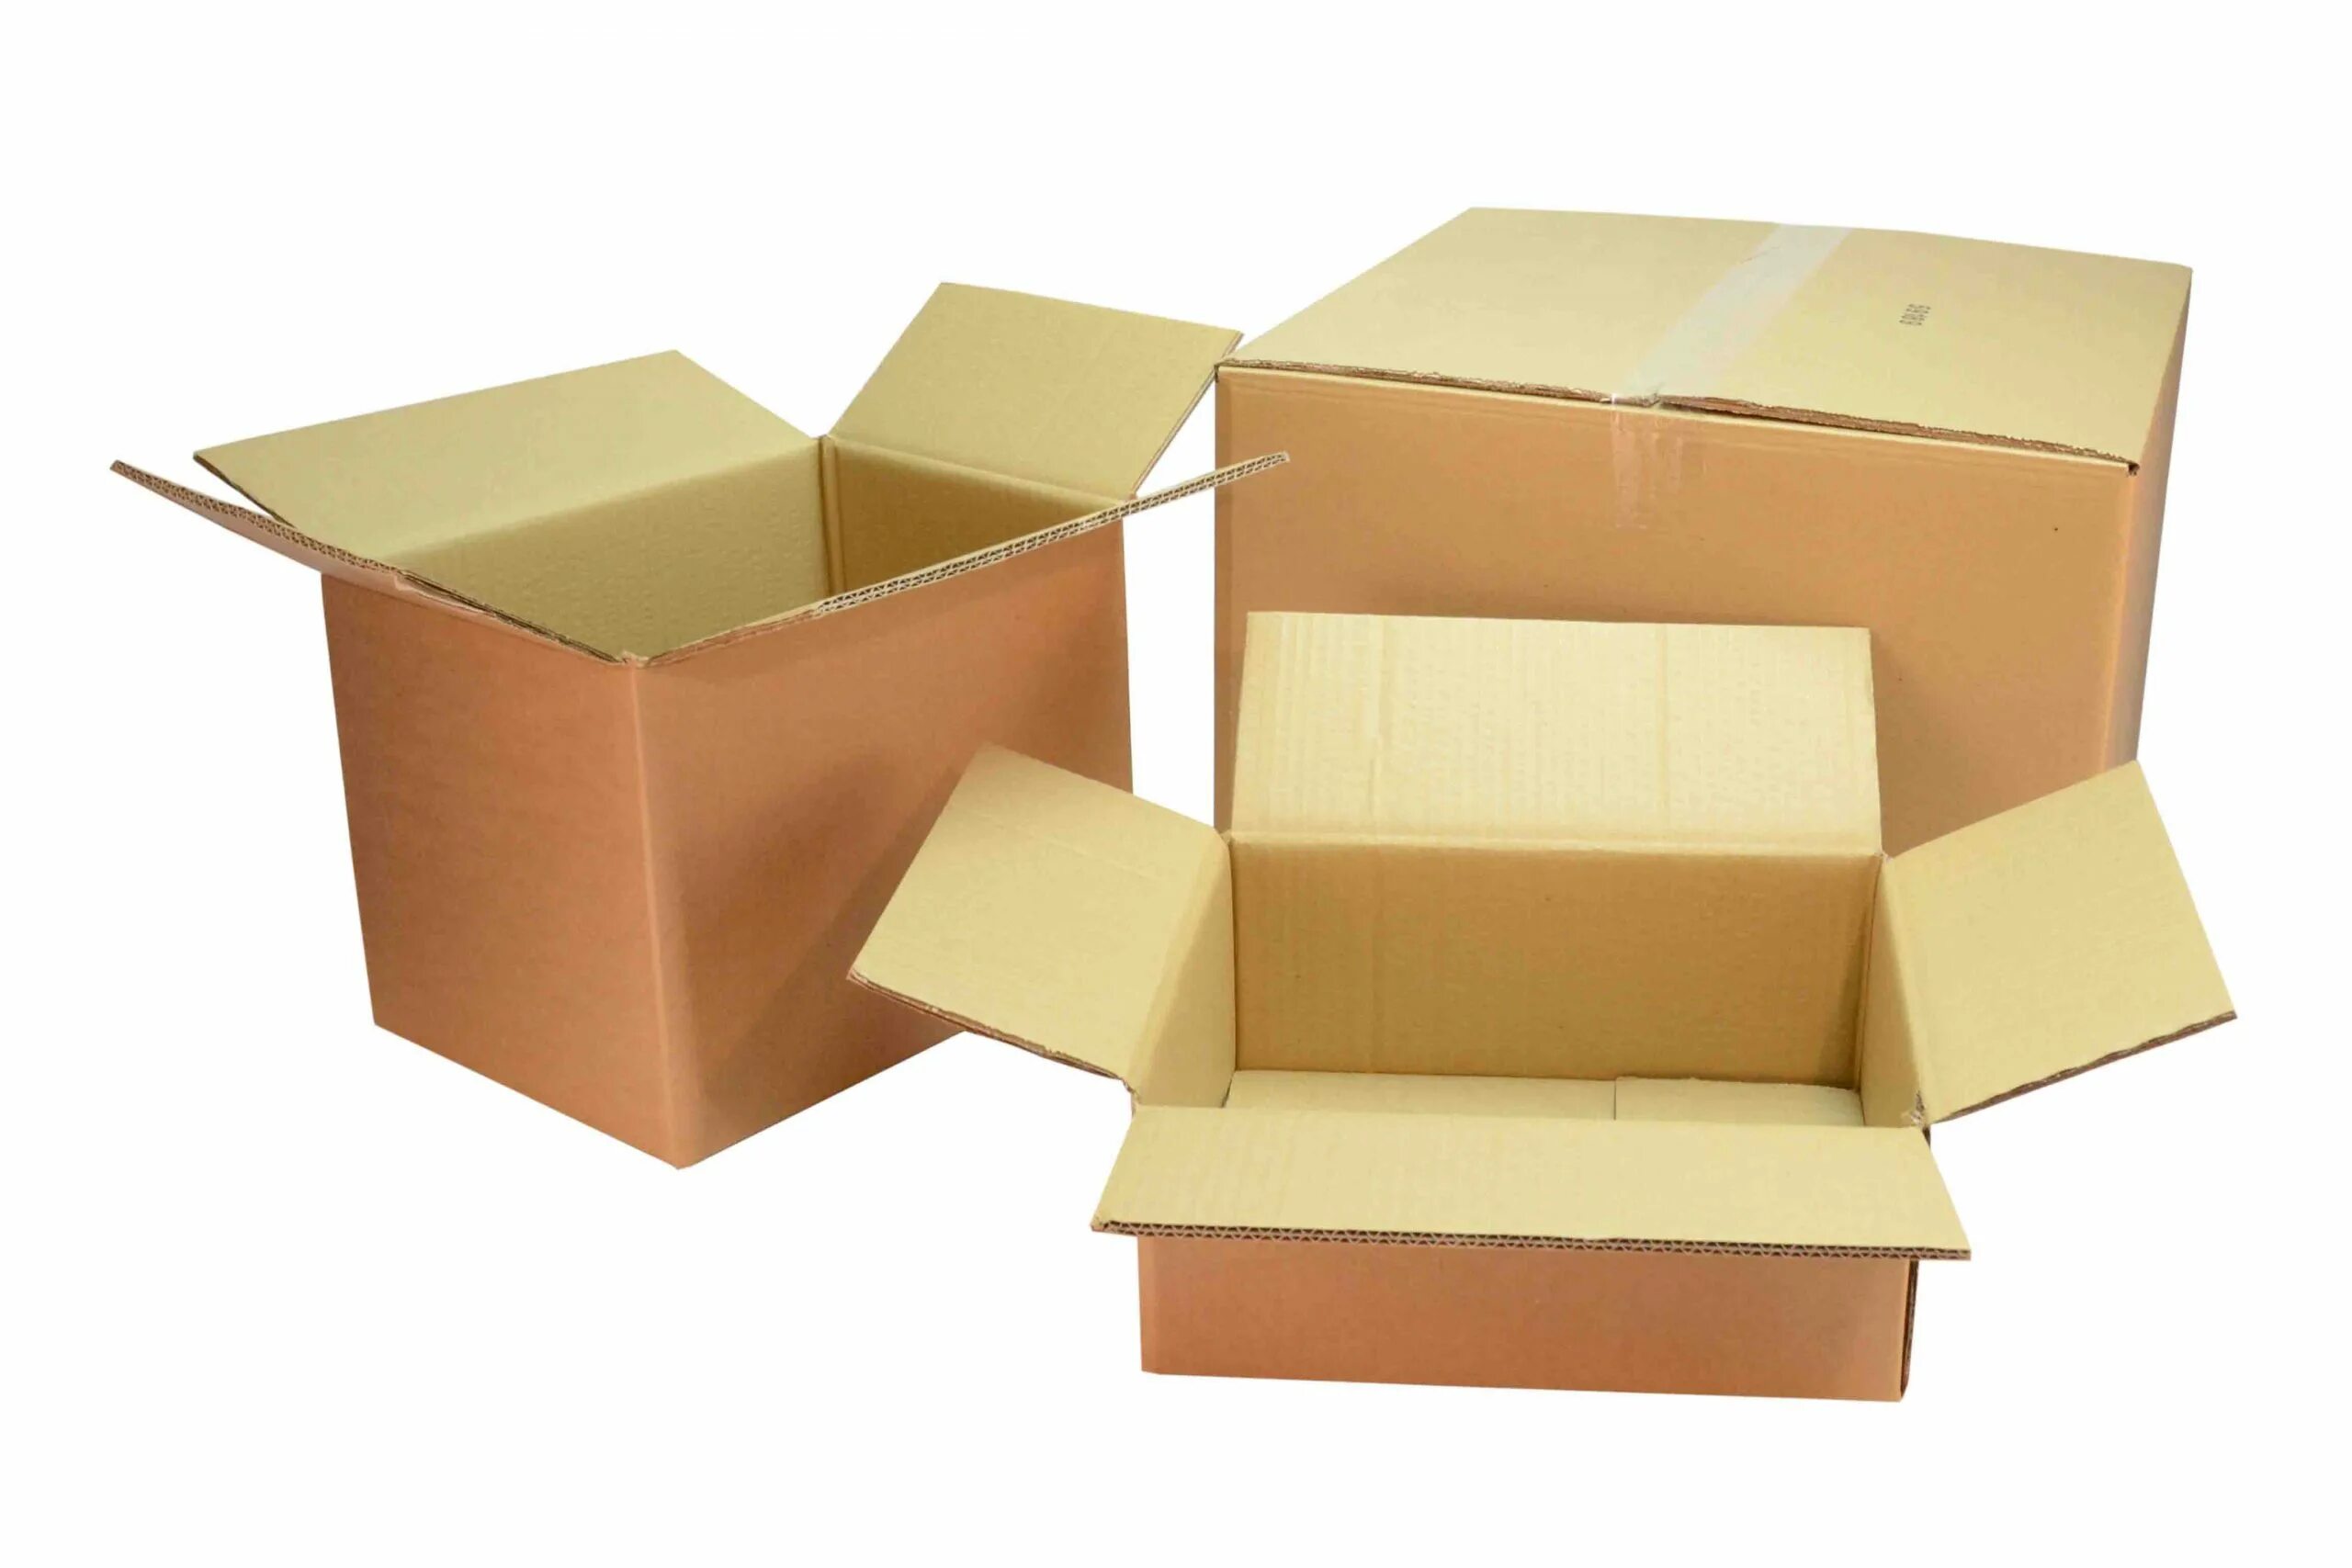 Картинки коробок. Картонные коробки на прозрачном фоне. Открытая коробка. Коробка для детей. Картонная коробка на прозрачном фоне.